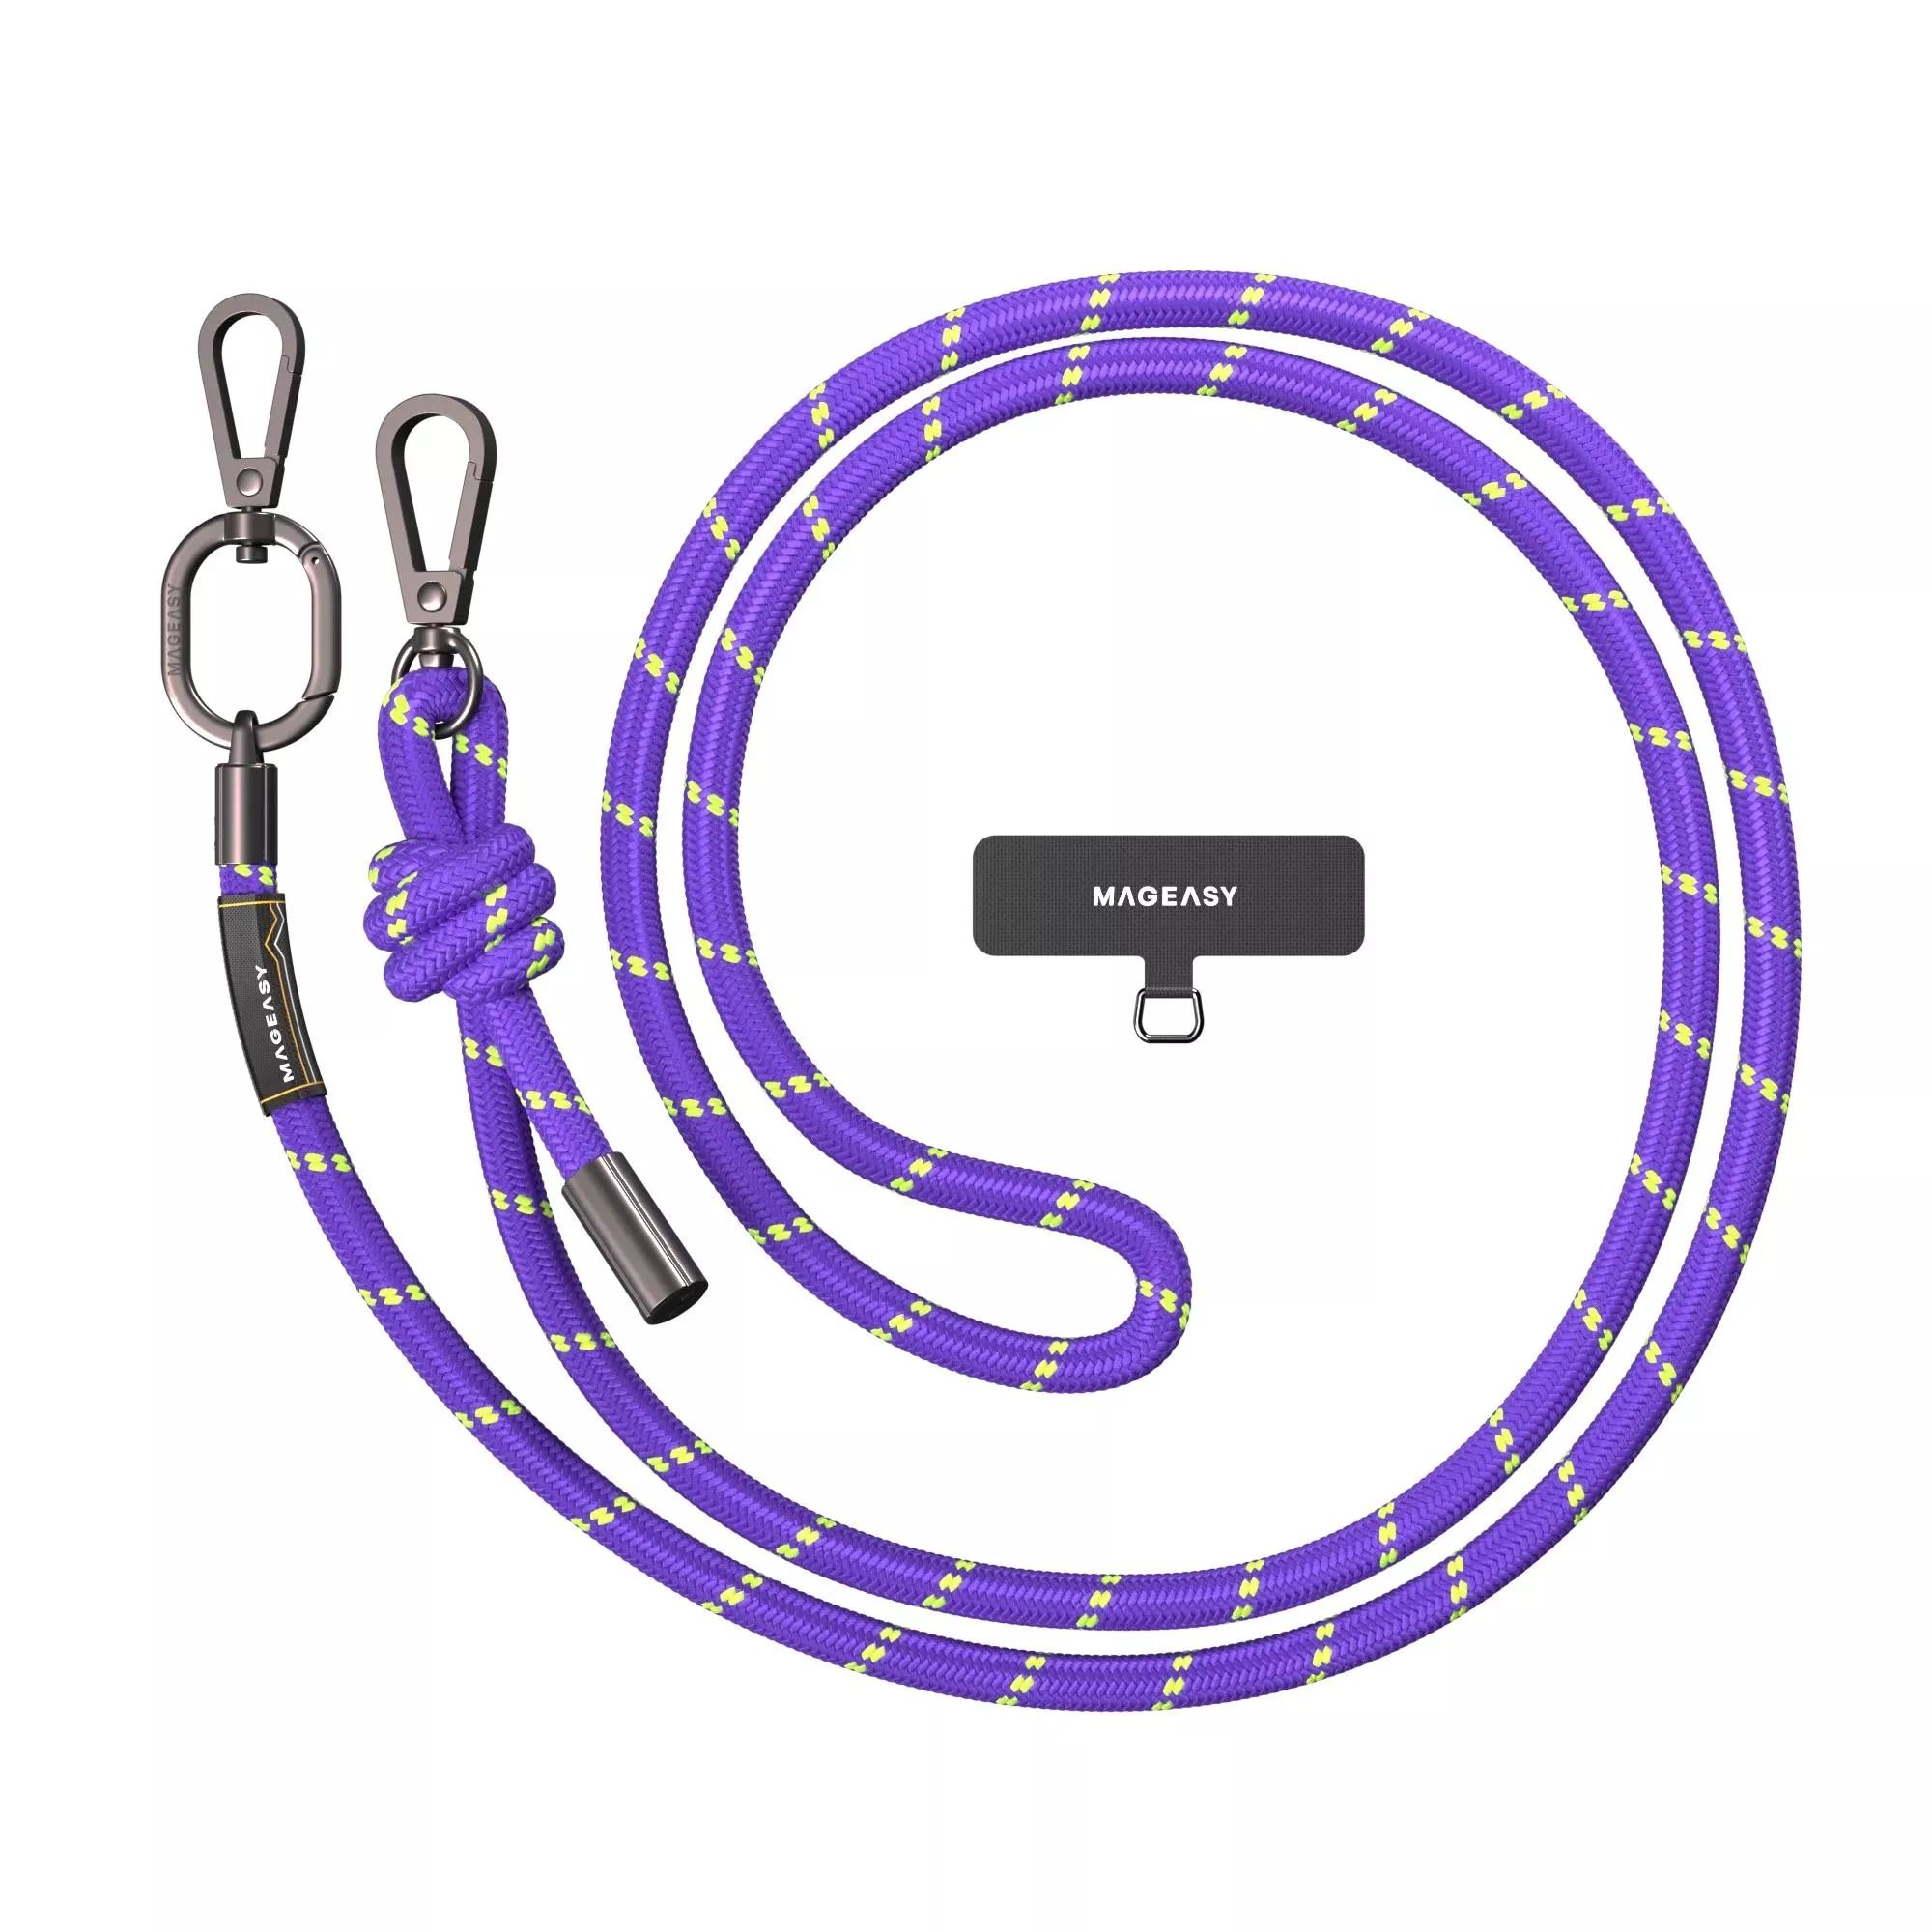 8.3 mm STRAP 掛繩/掛繩片組 (相容 iOS / Android 手機殼) 警戒紫